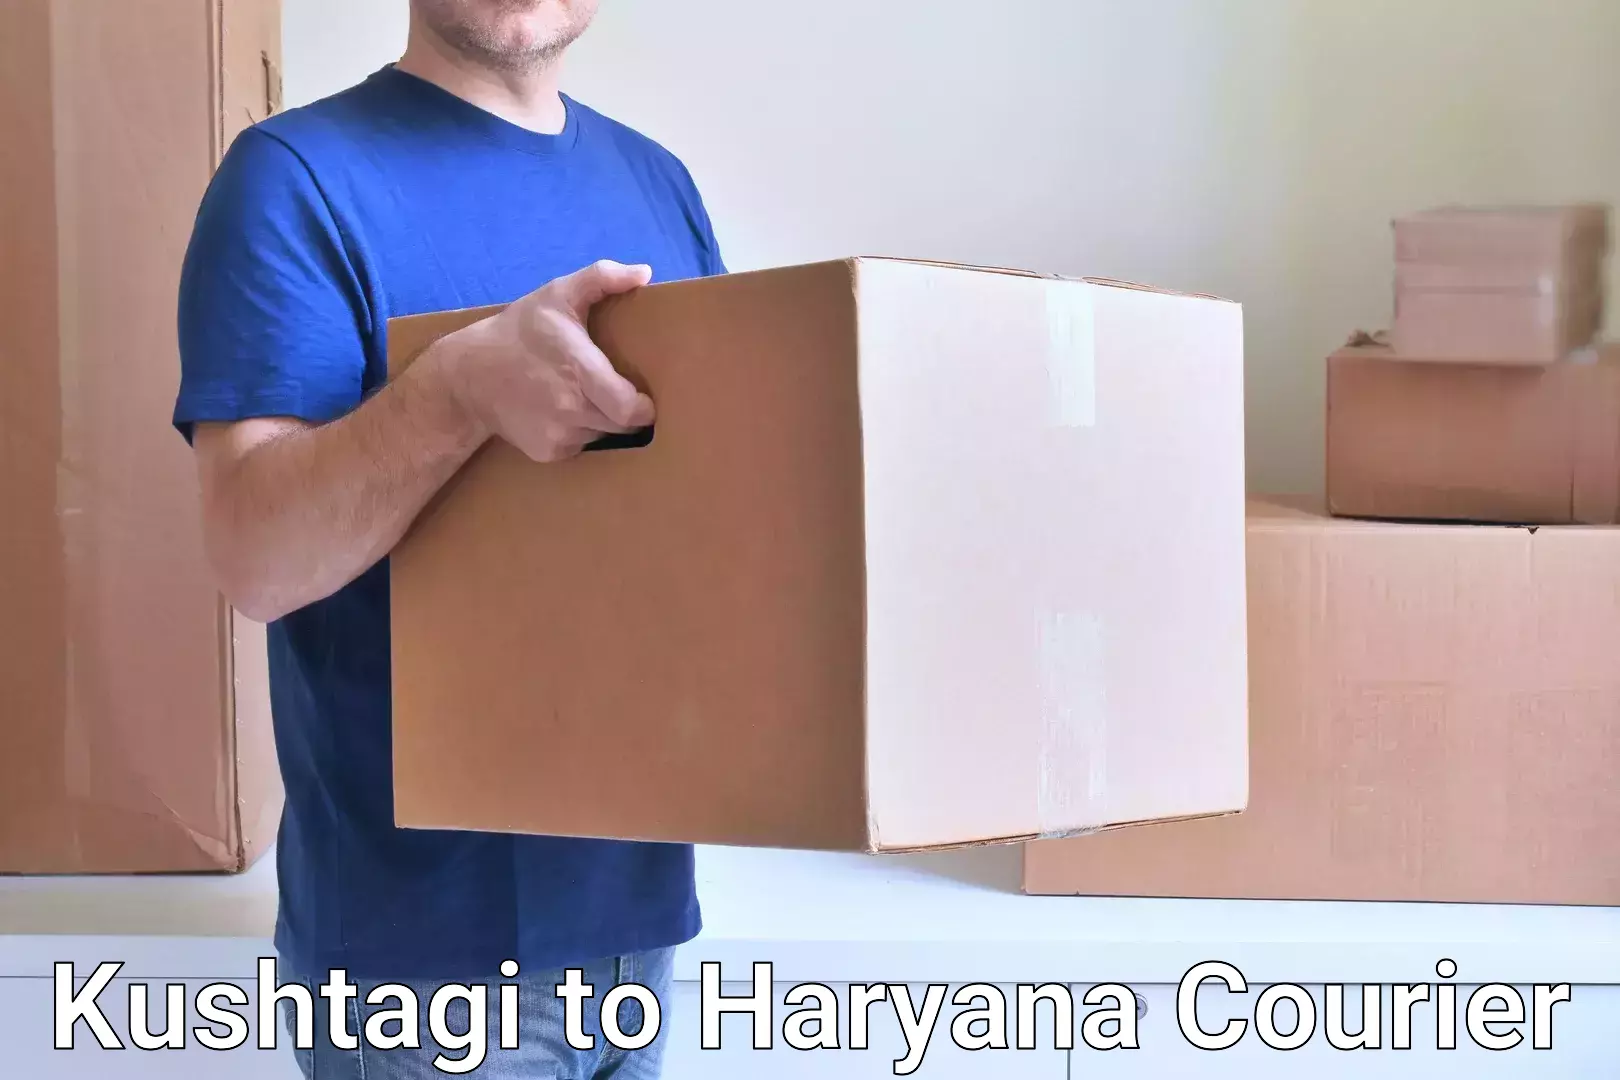 Courier service booking Kushtagi to Bilaspur Haryana